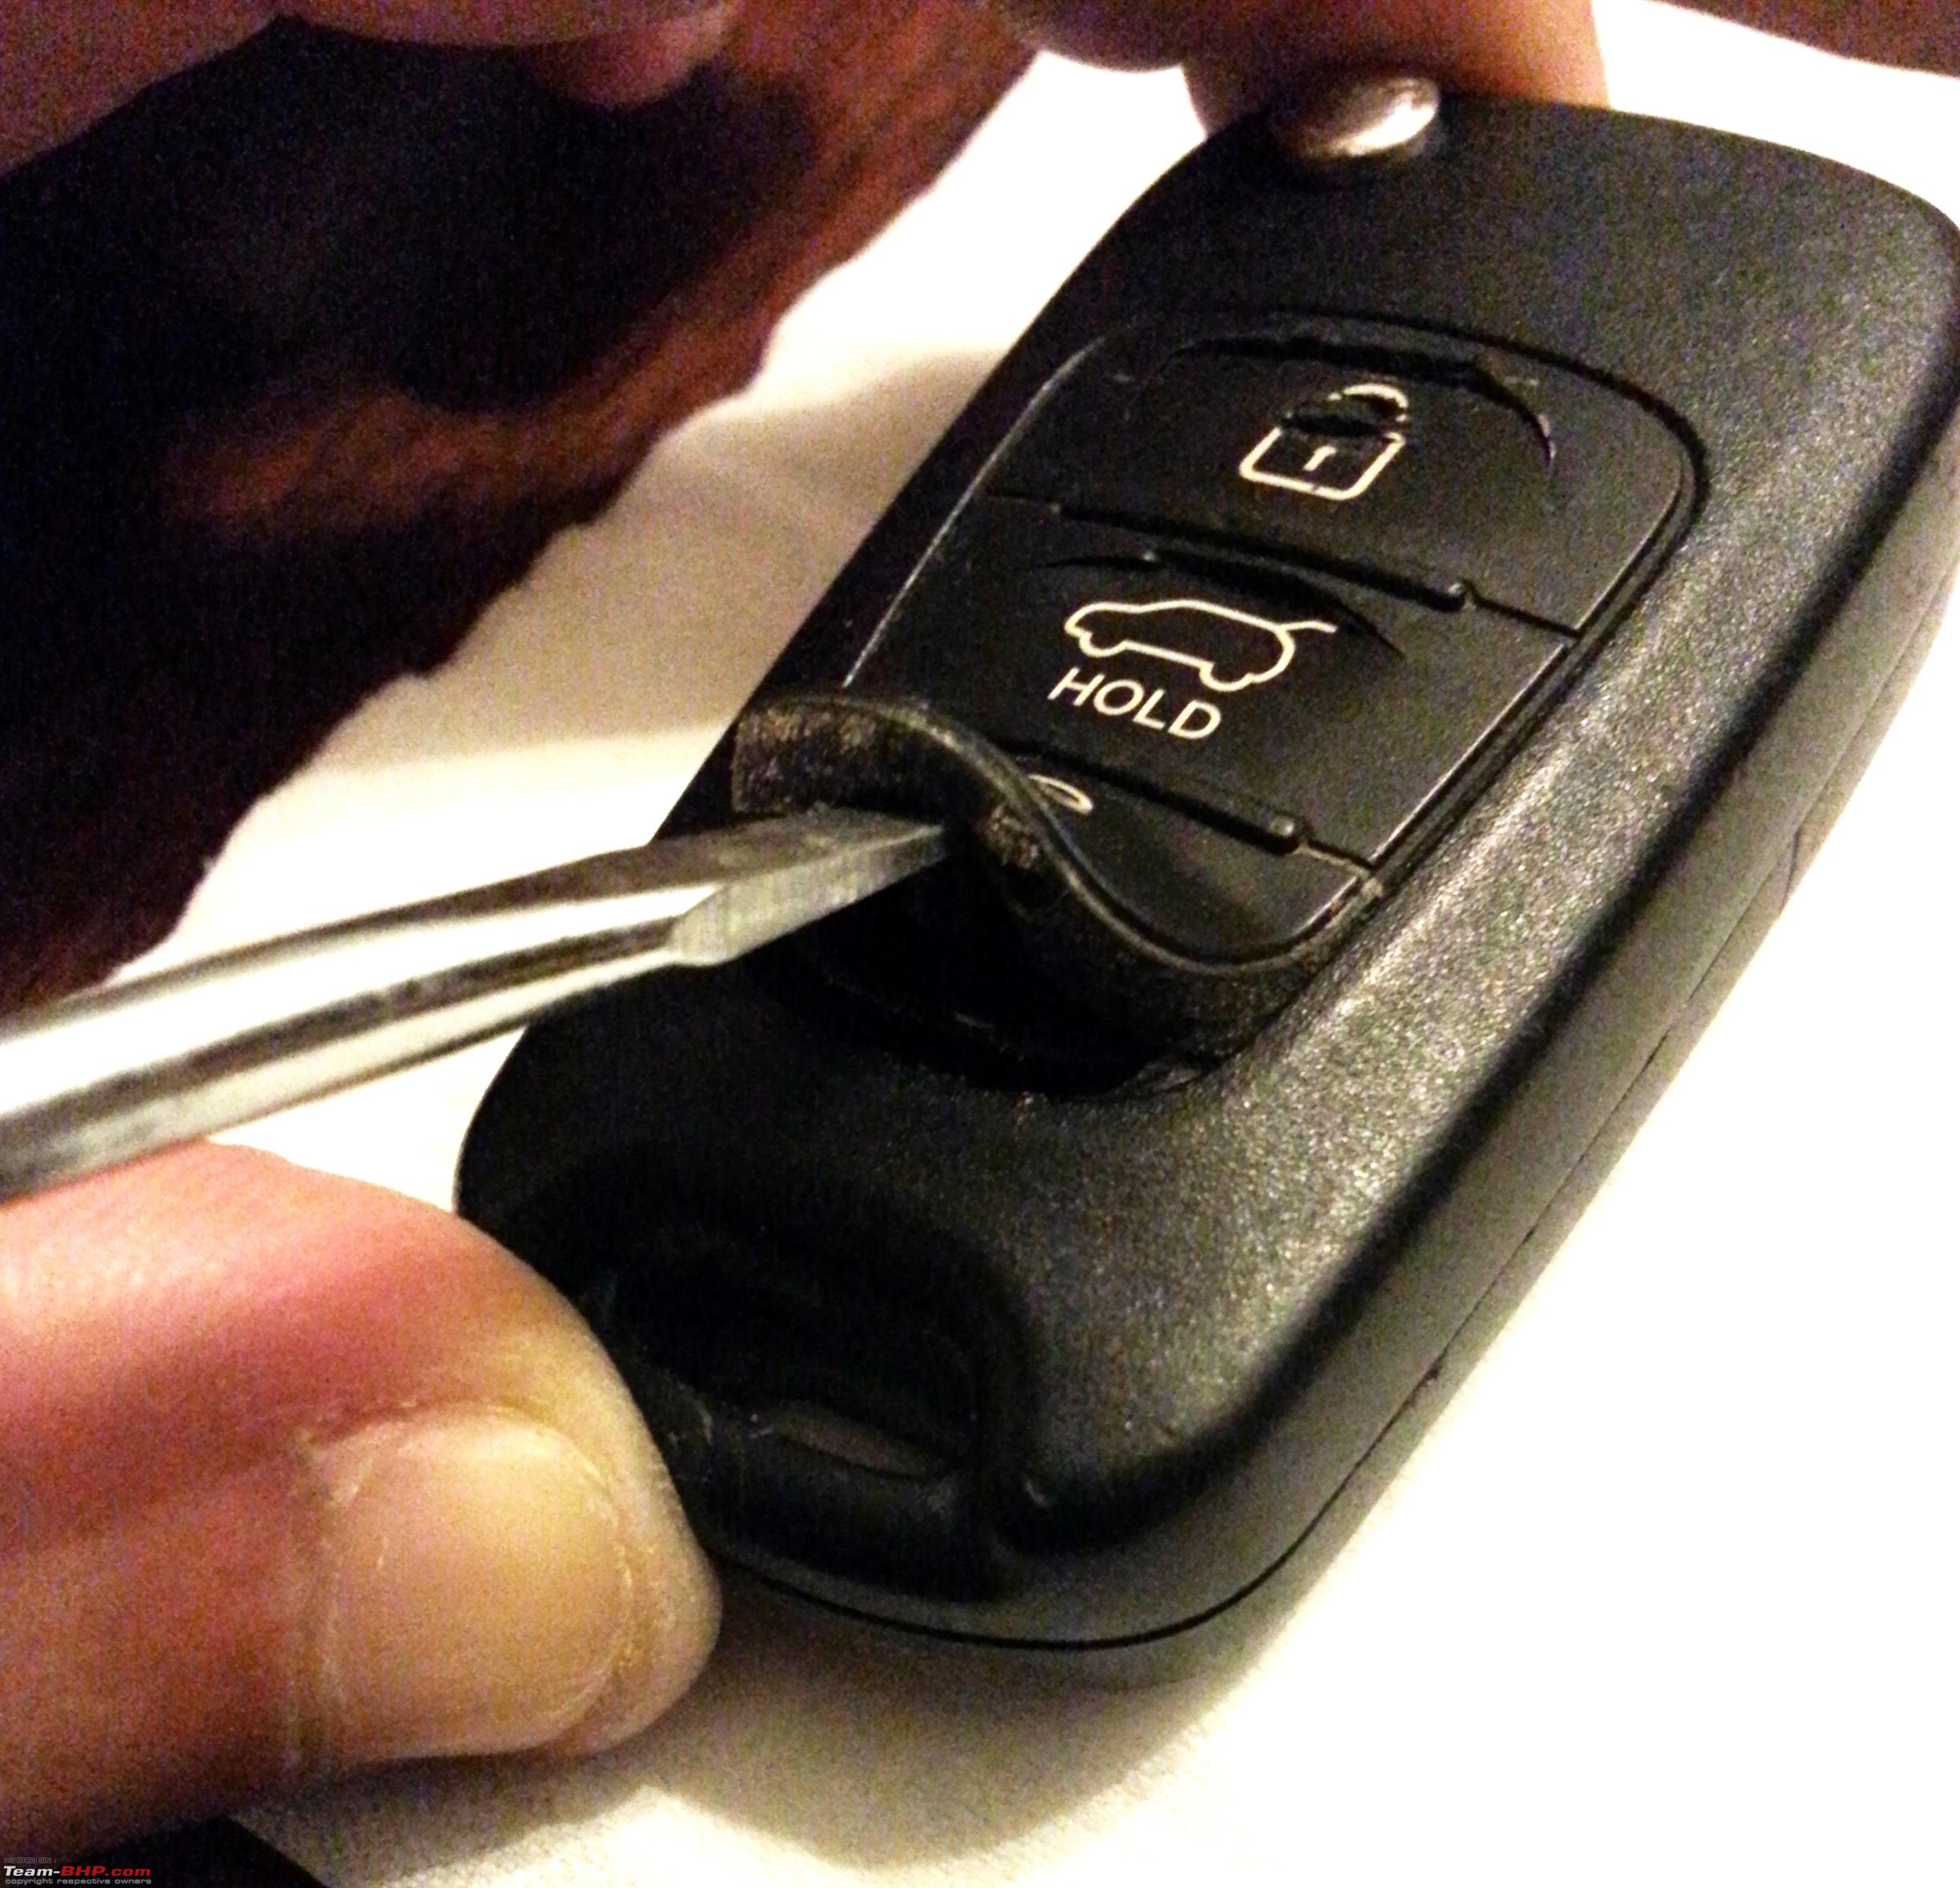 Does Anyone Keep Car Keys Inside a Vernis Key Pouch?